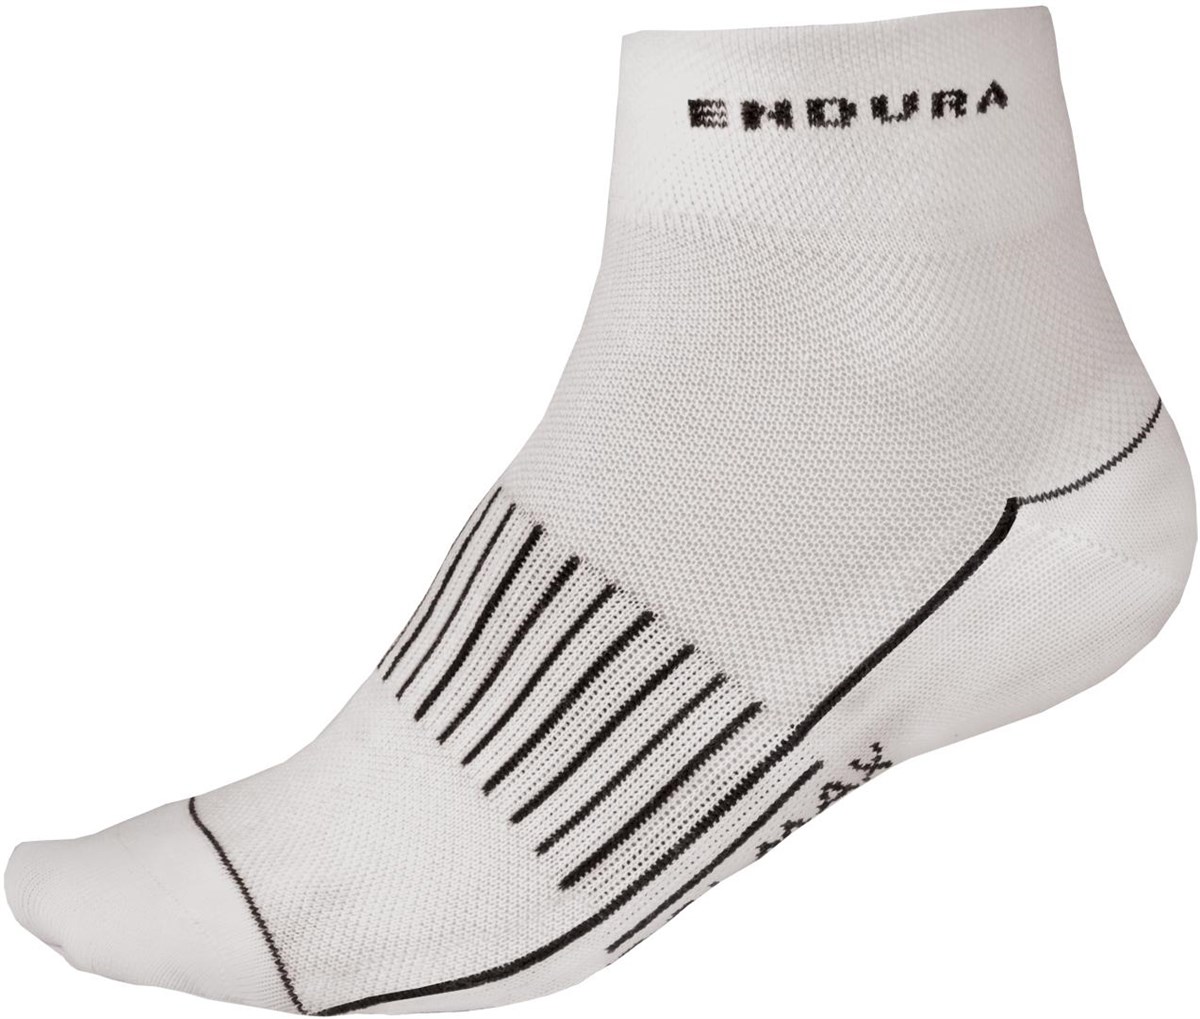 Endura Coolmax Race II Cycling Socks - Triple Pack product image